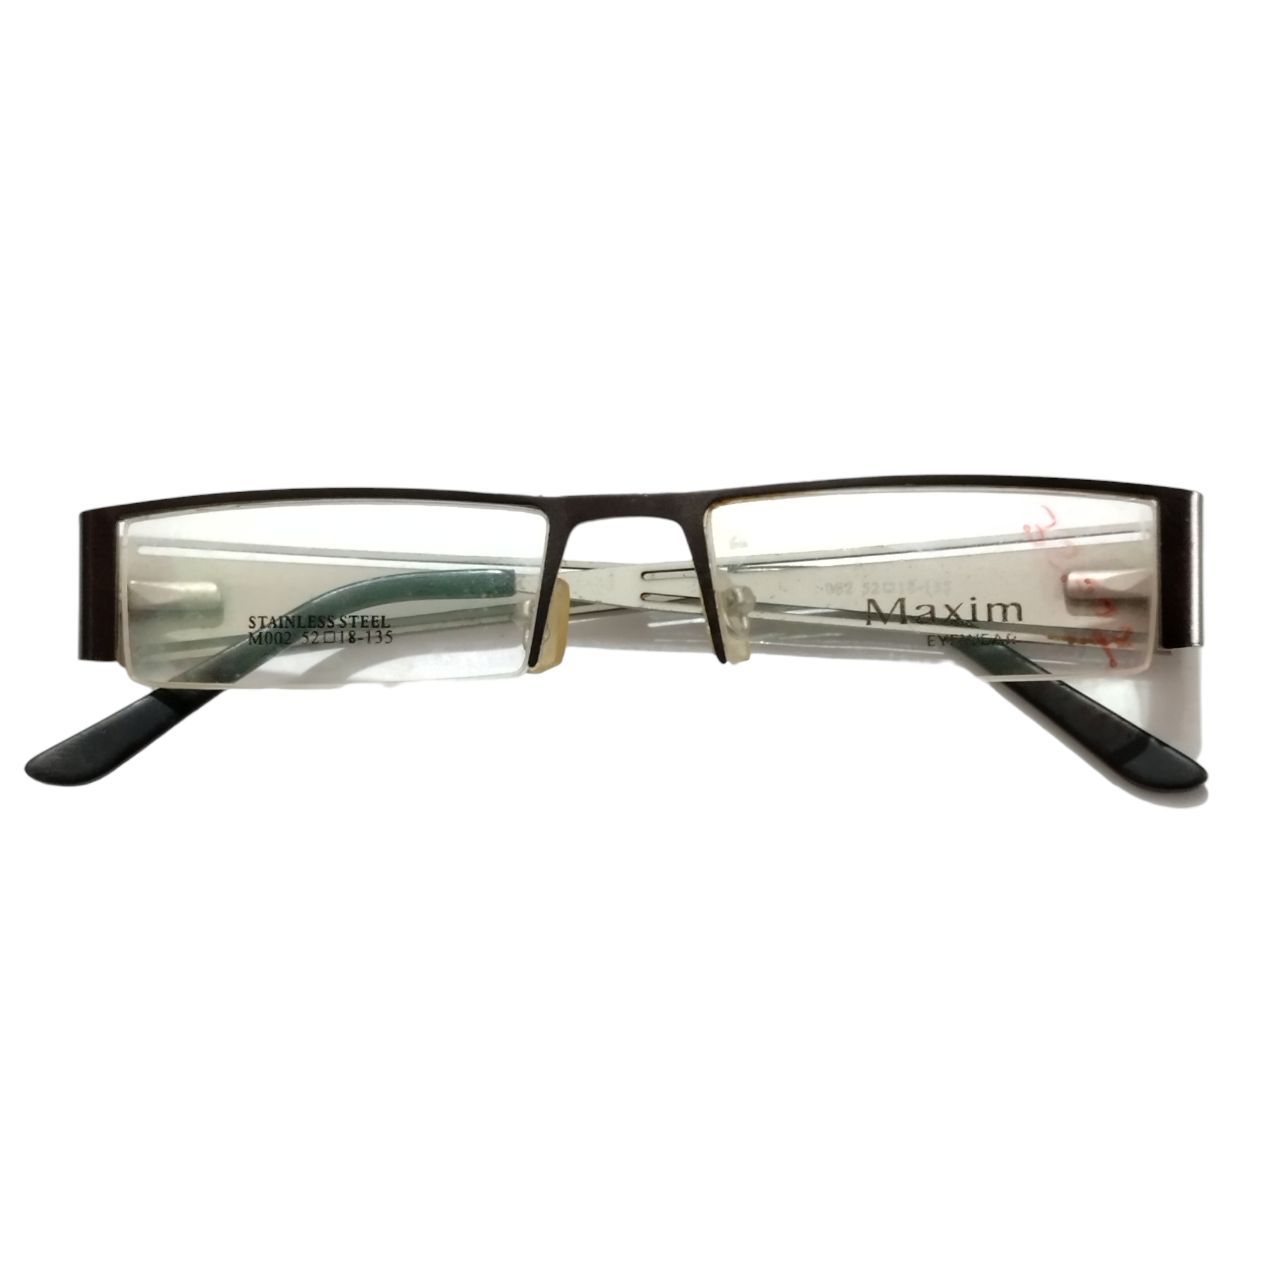 Rectangle Black Supra Spectacle Frame Glasses